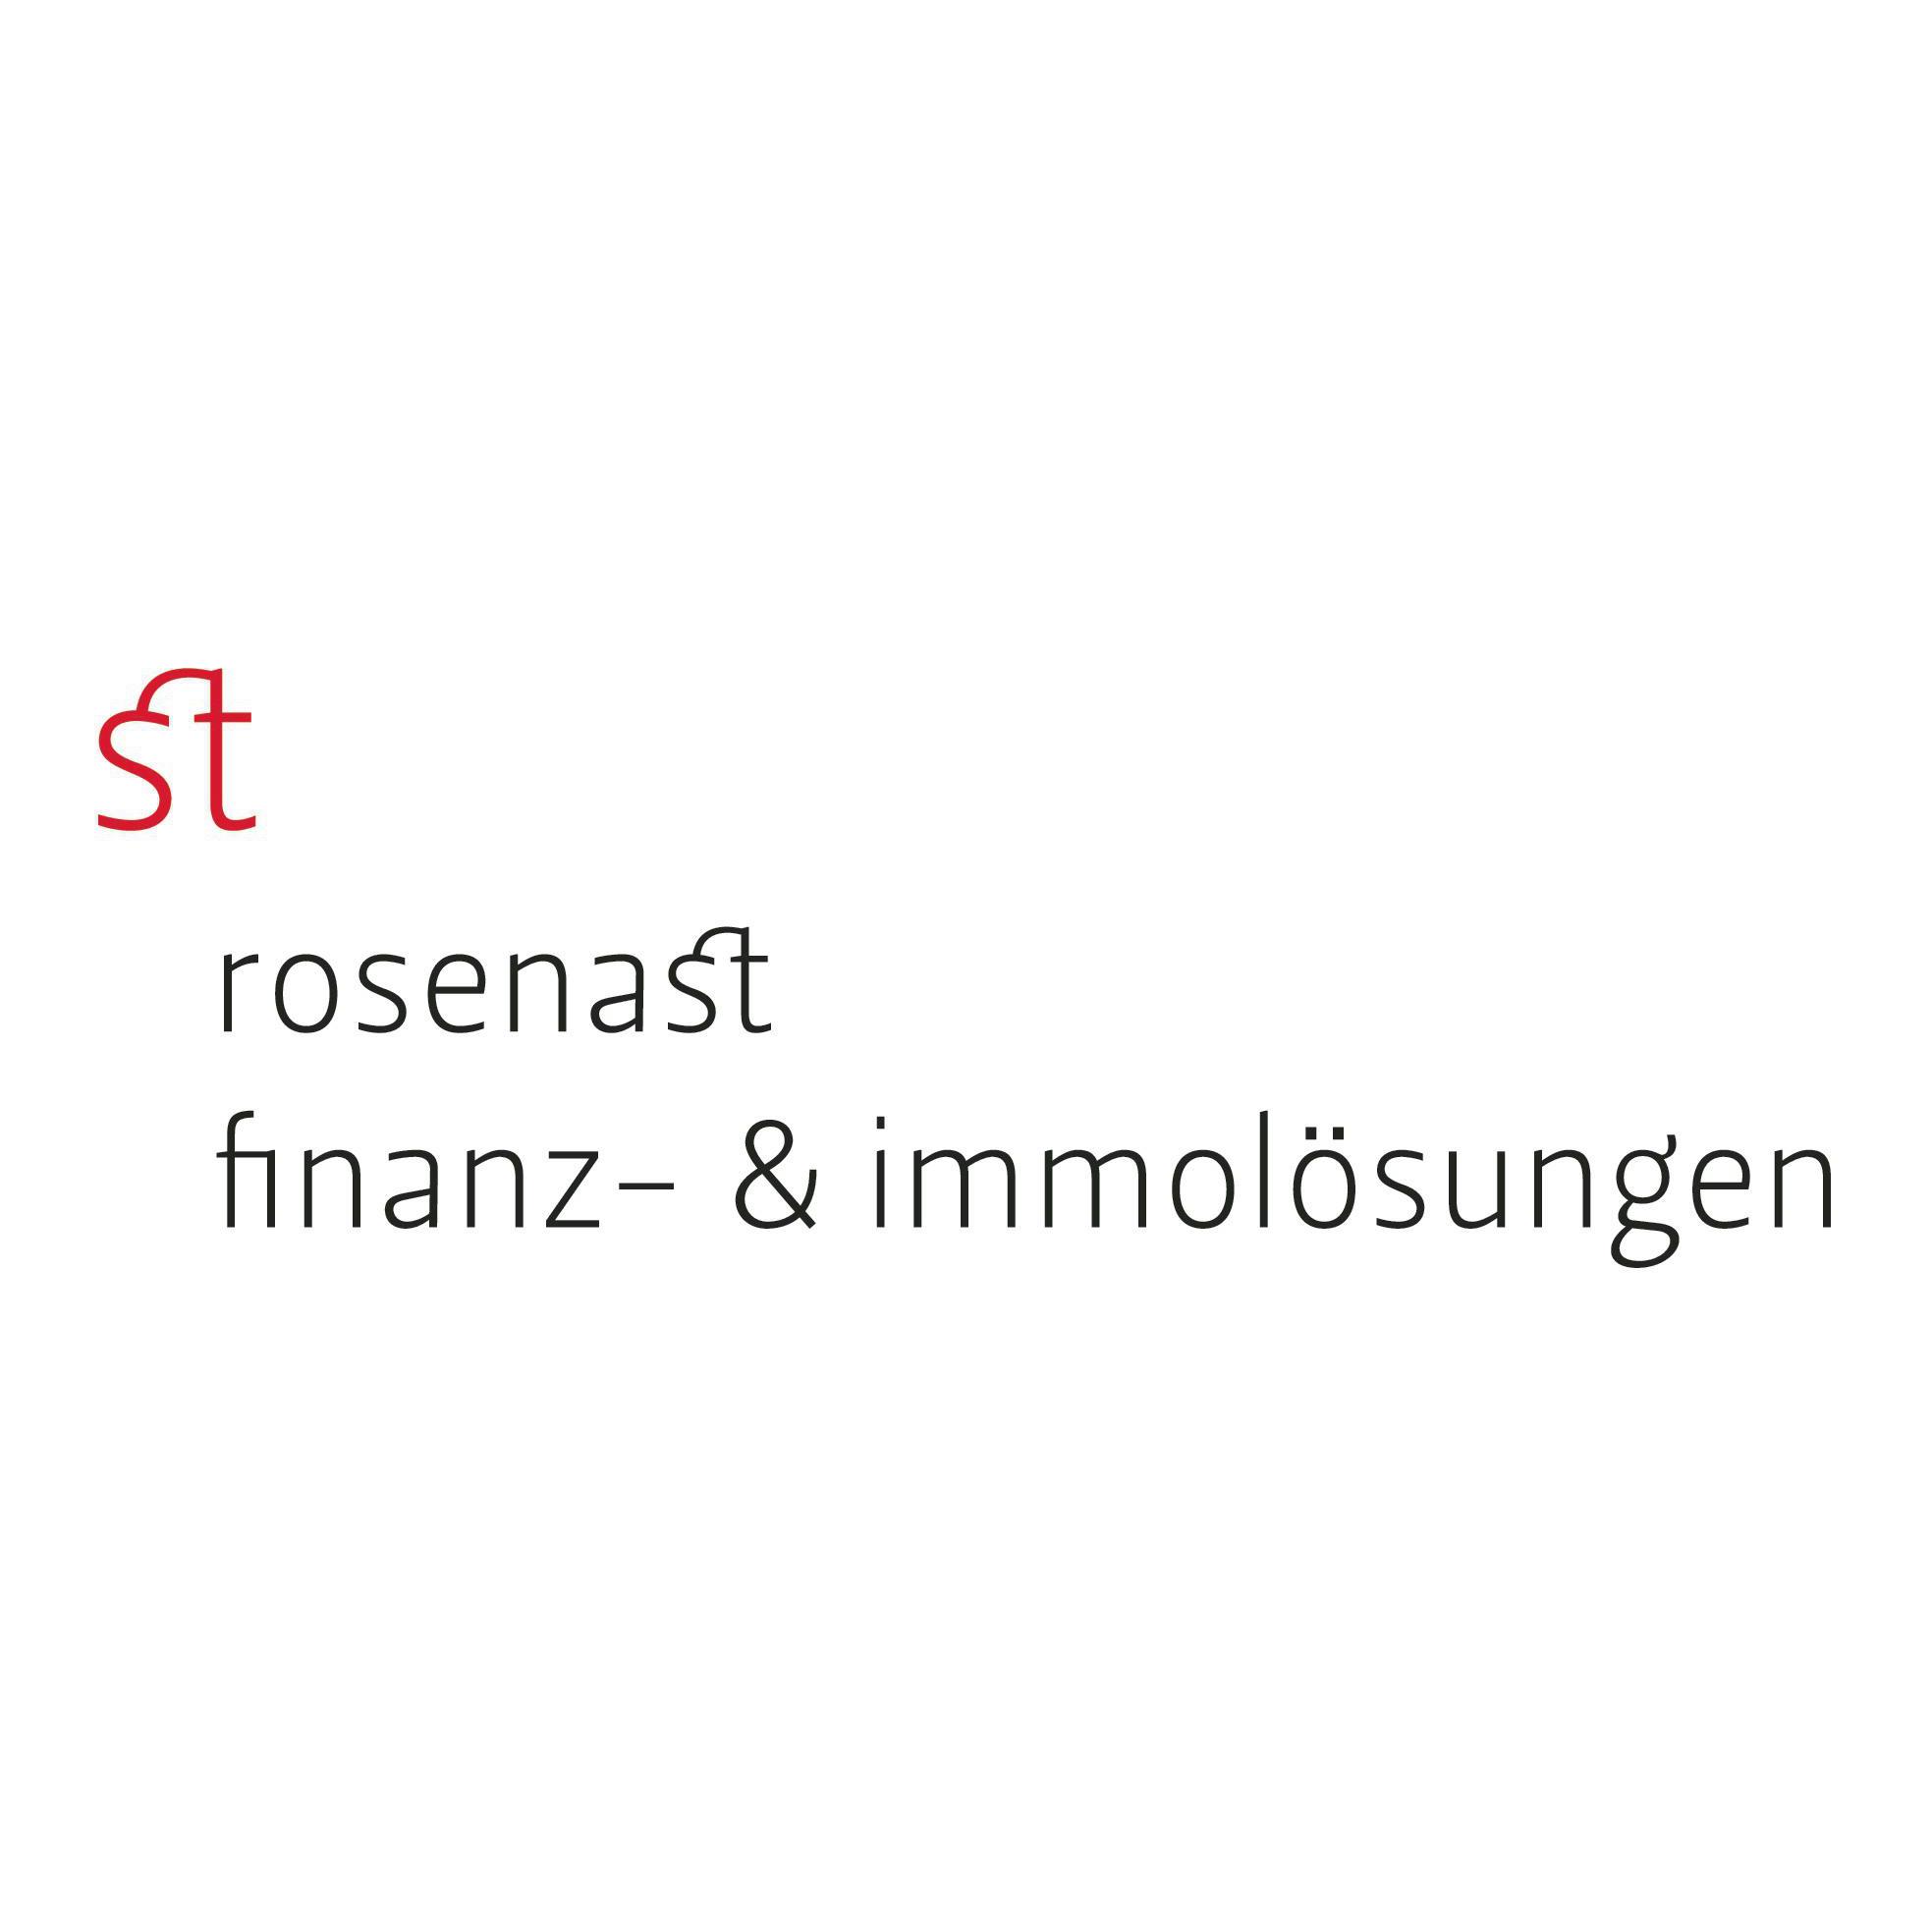 rosenast finanz- & immolösungen Logo